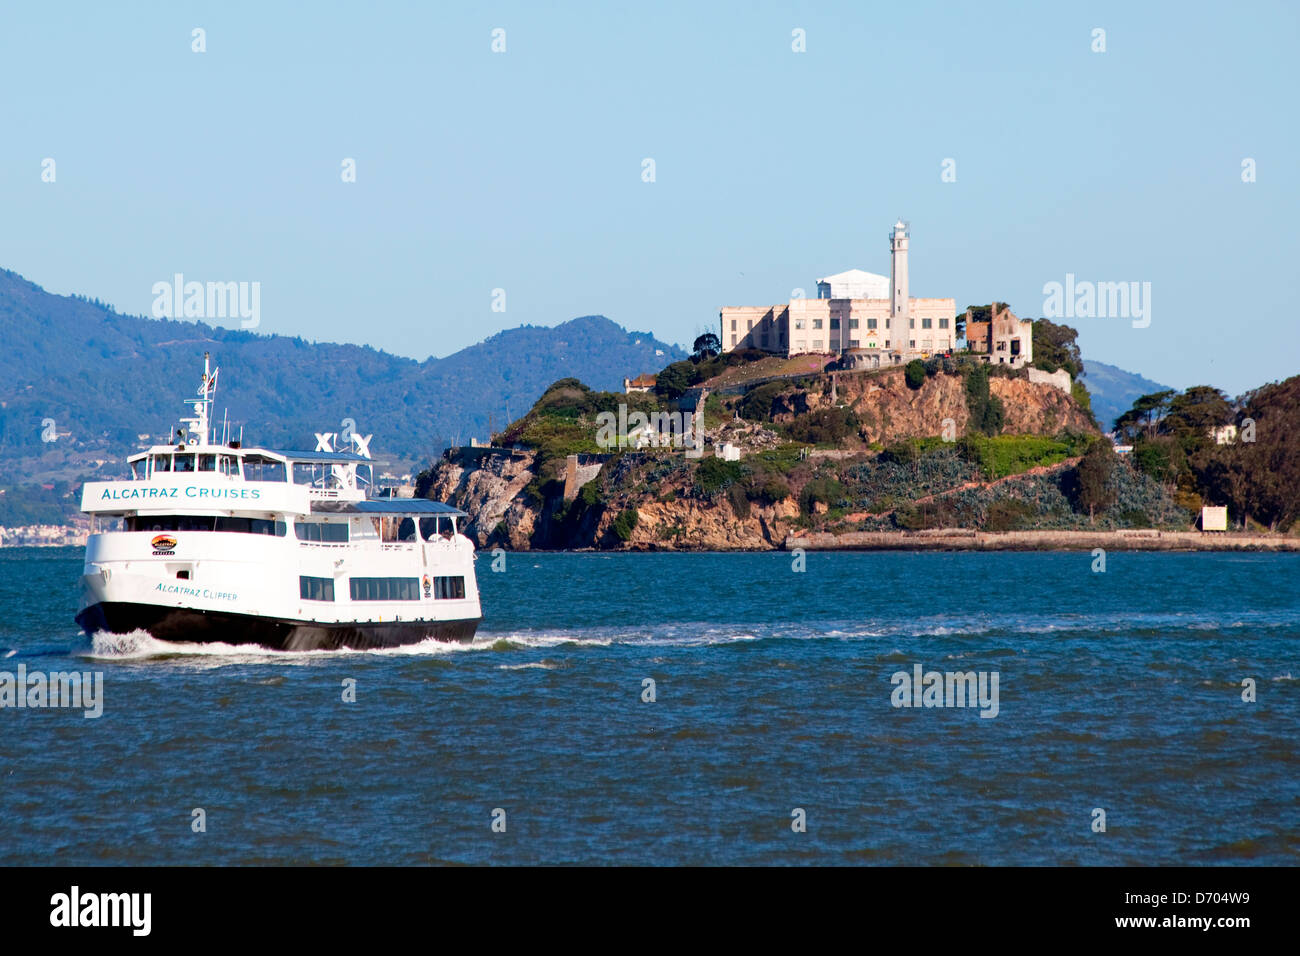 alcatraz cruises ferry leaving alcatraz island for pier 33 in san